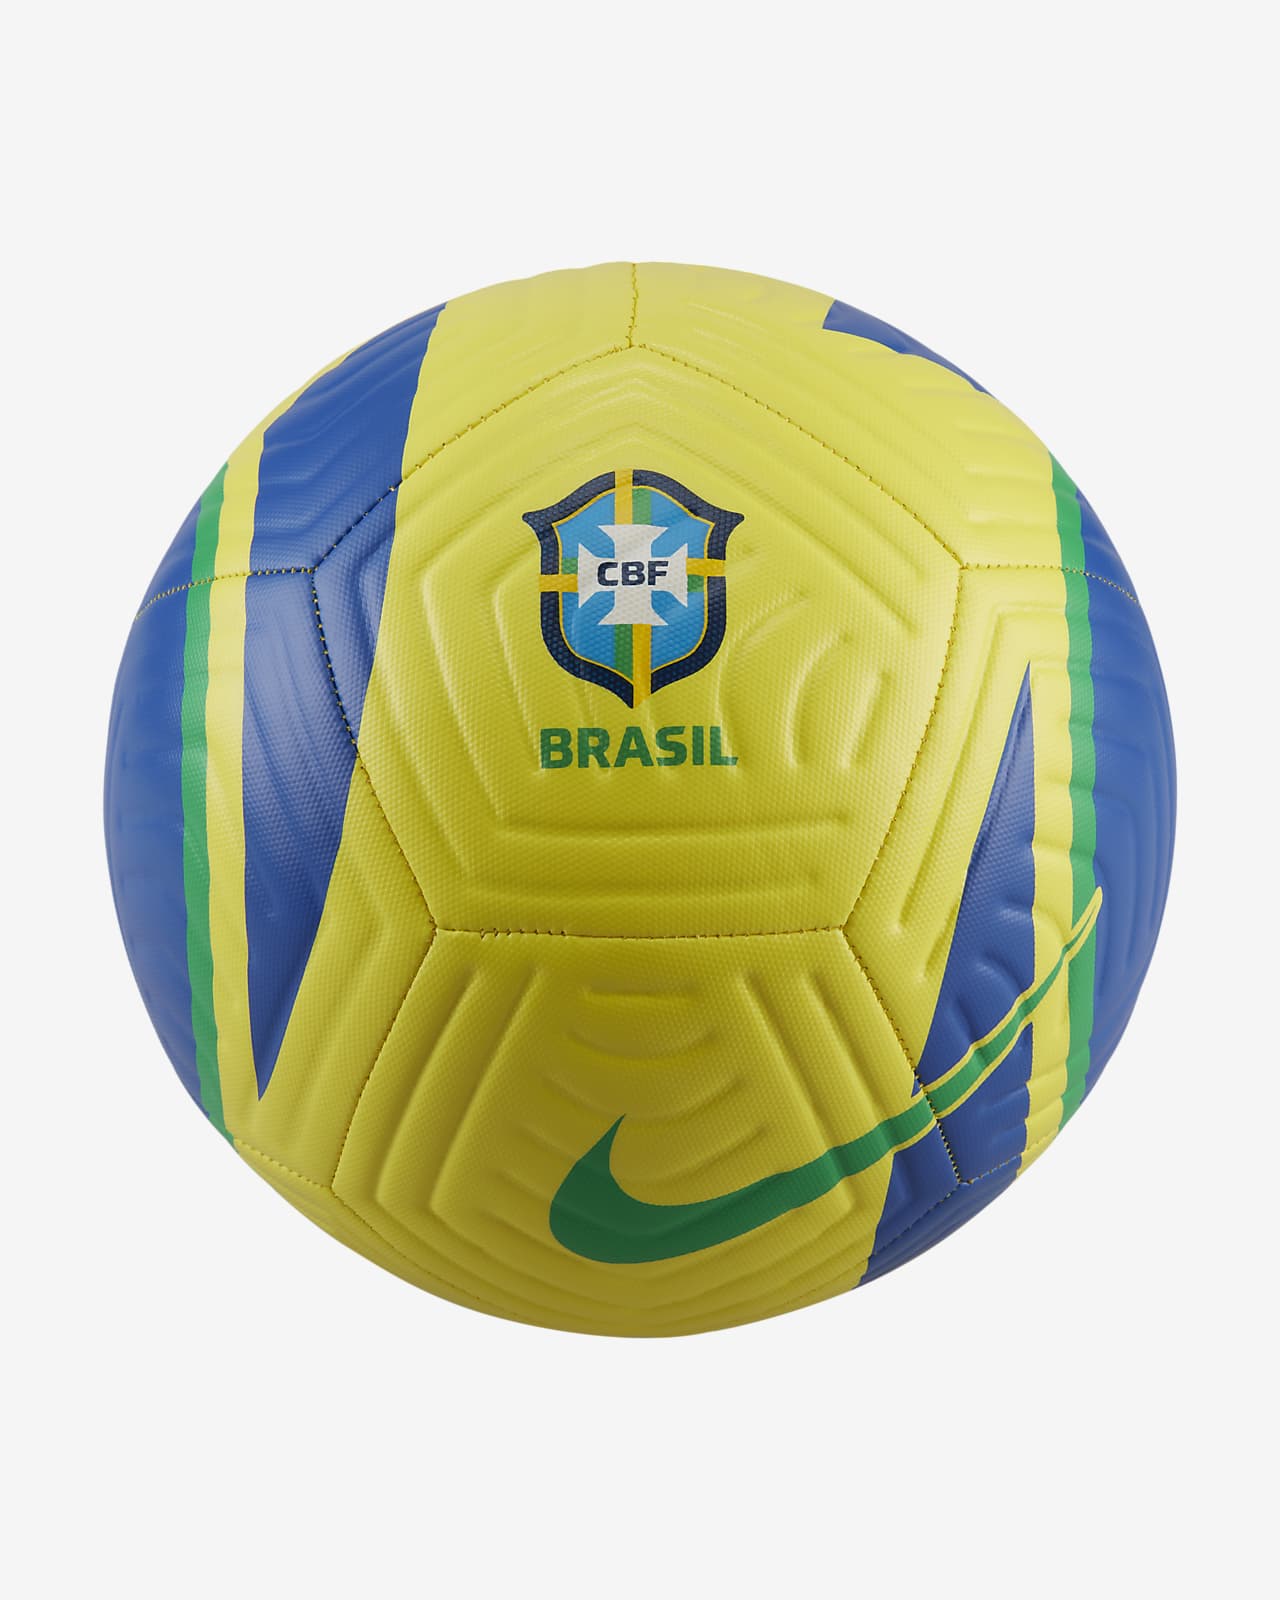 https://static.nike.com/a/images/t_PDP_1280_v1/f_auto,q_auto:eco/37d39596-8669-42a9-a1d6-732b78dccb21/brazil-academy-soccer-ball-1913lr.png